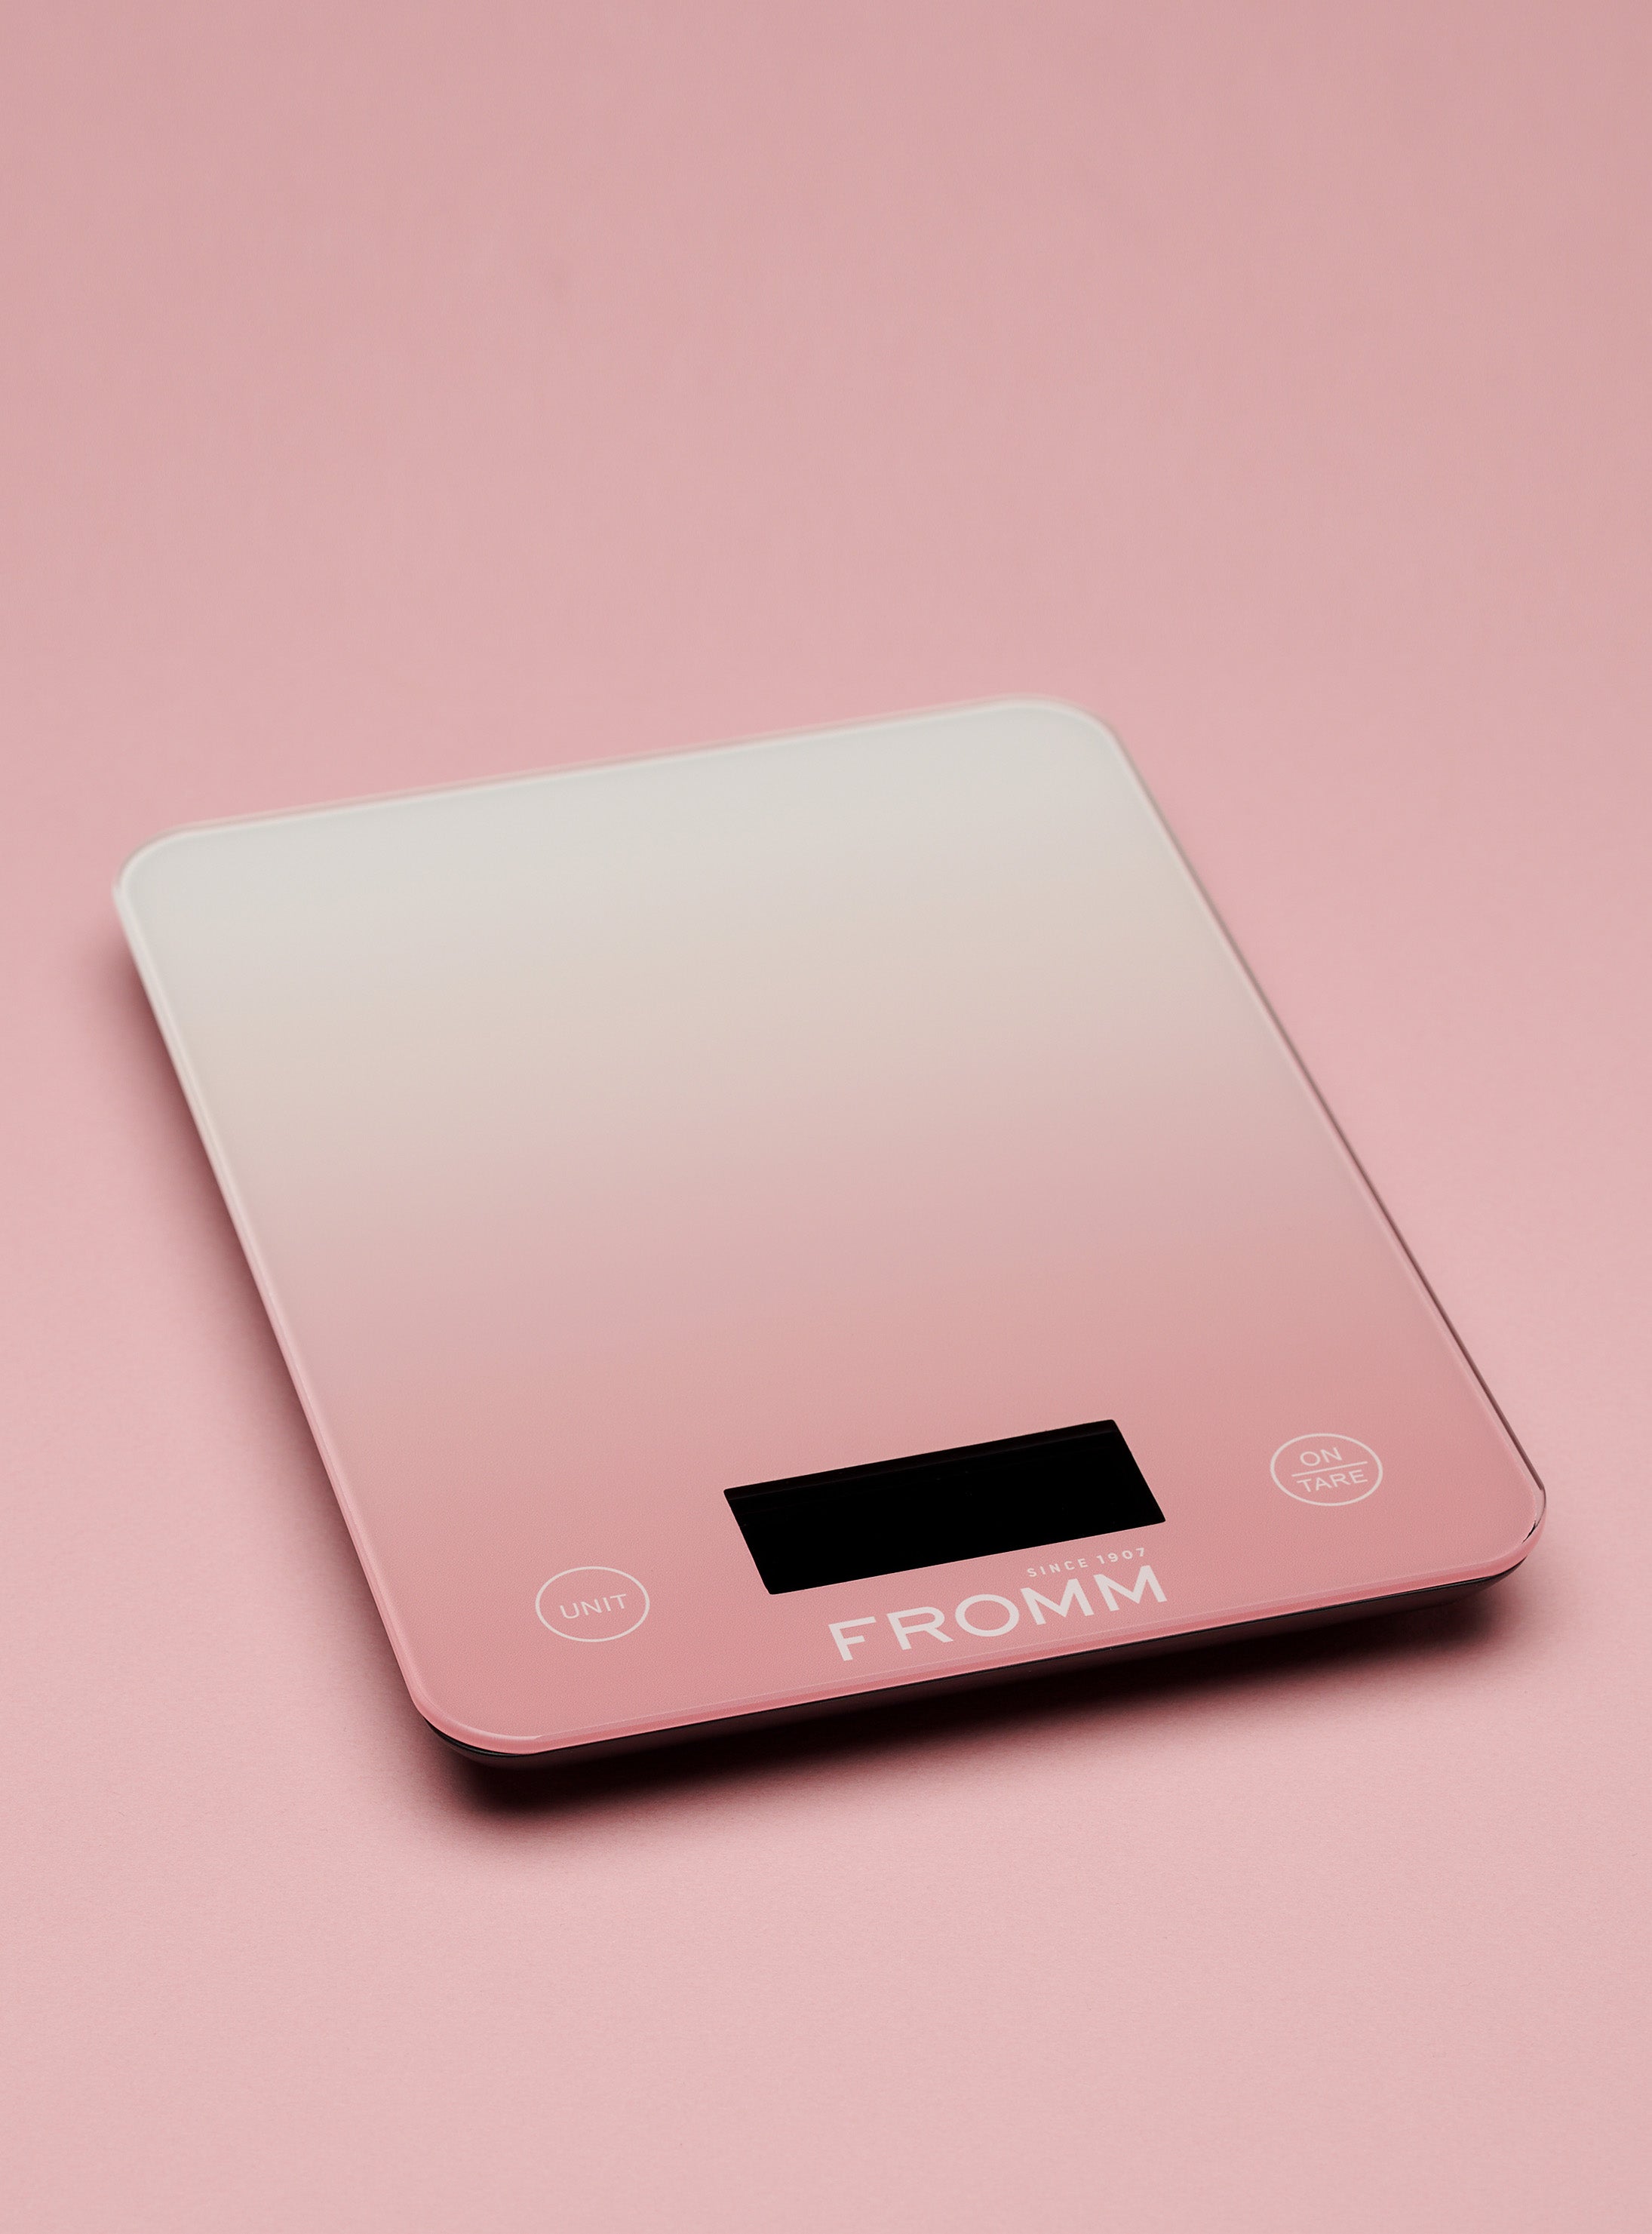 Framar Digital Color Scale - International Beauty Pro